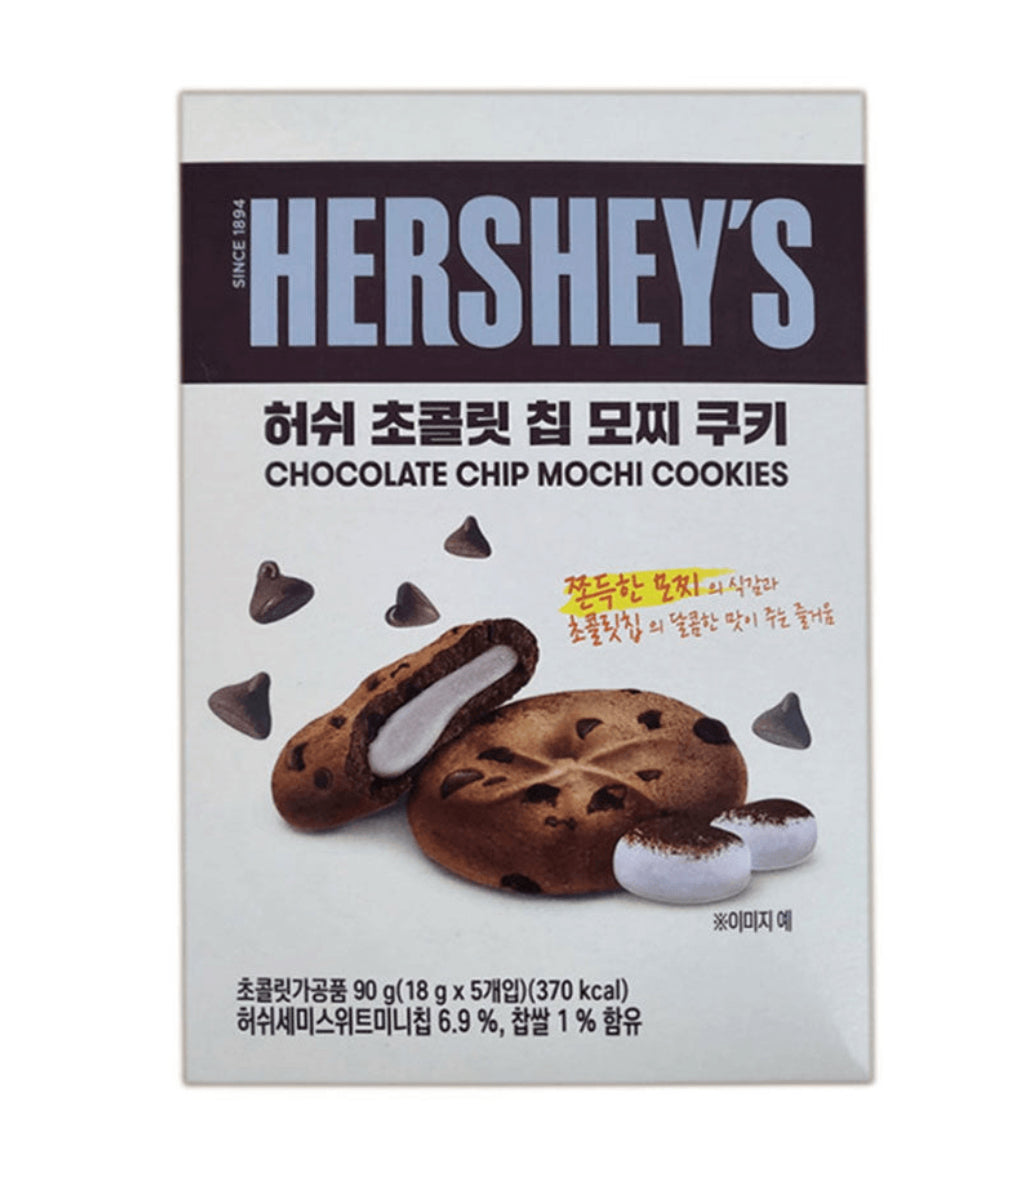 Hershey's Chocolate Chip Mochi
Cookie 90g